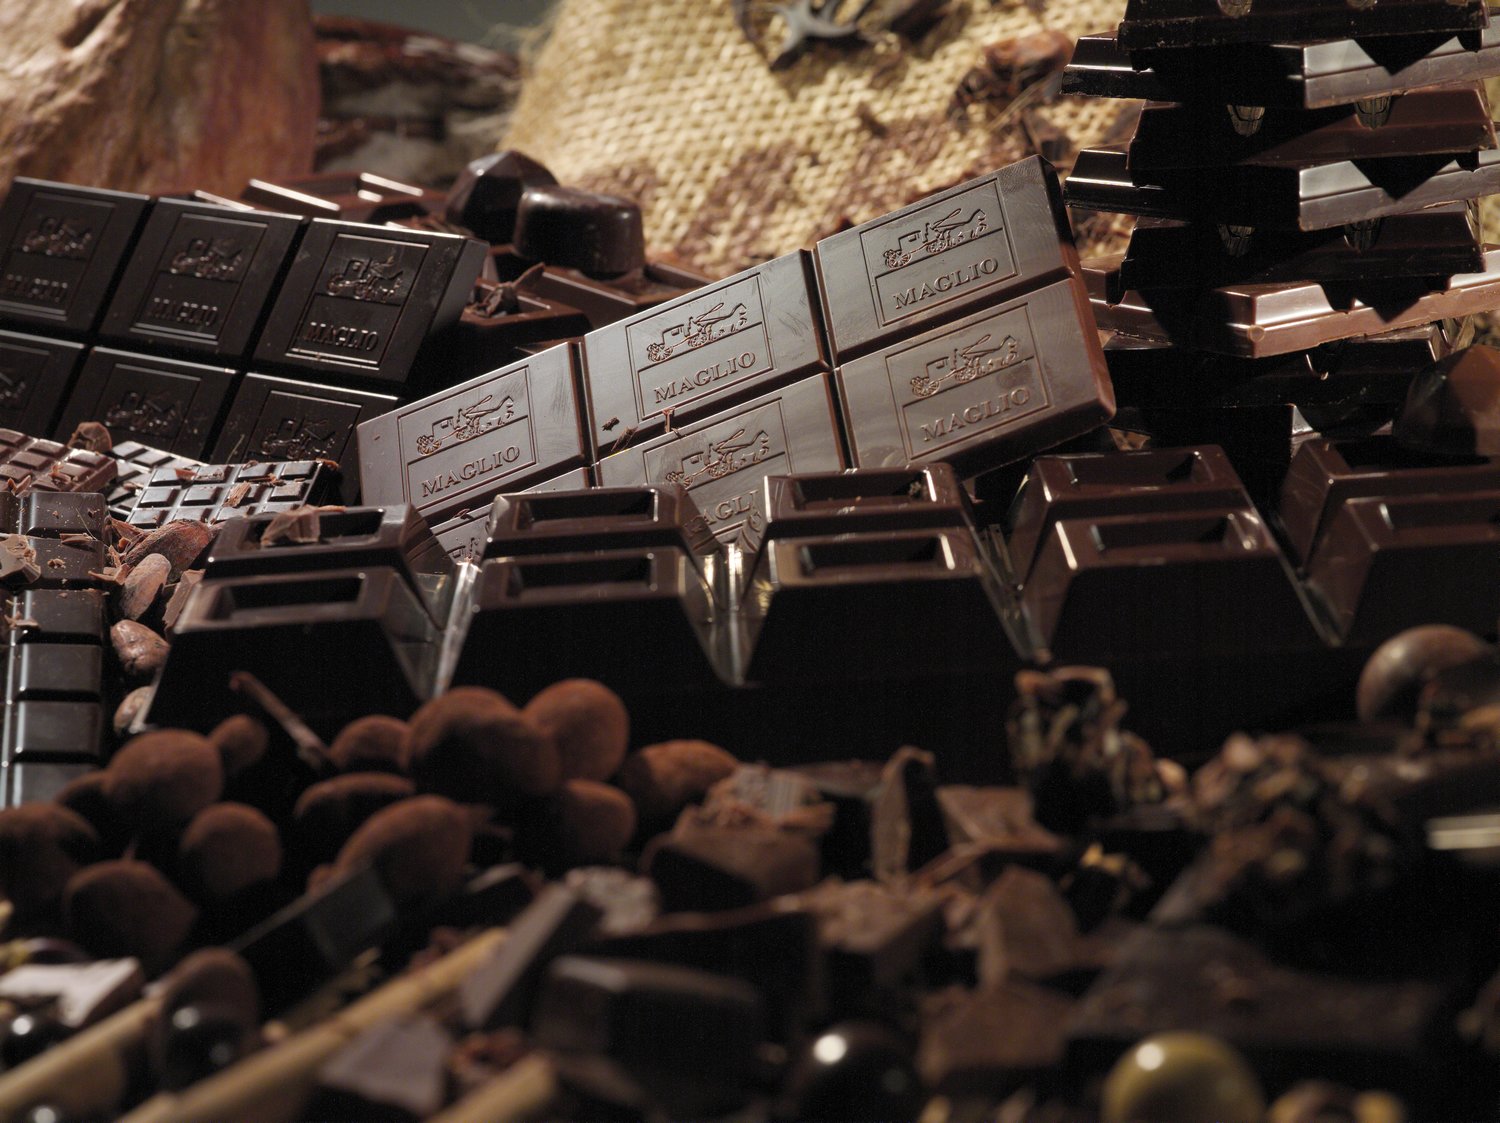 Вкусный шоколад купить. Amedei selezioni шоколад. TM Amedei конфеты. Самый вкусный шоколад в мире. Самый вкусный шоколад.